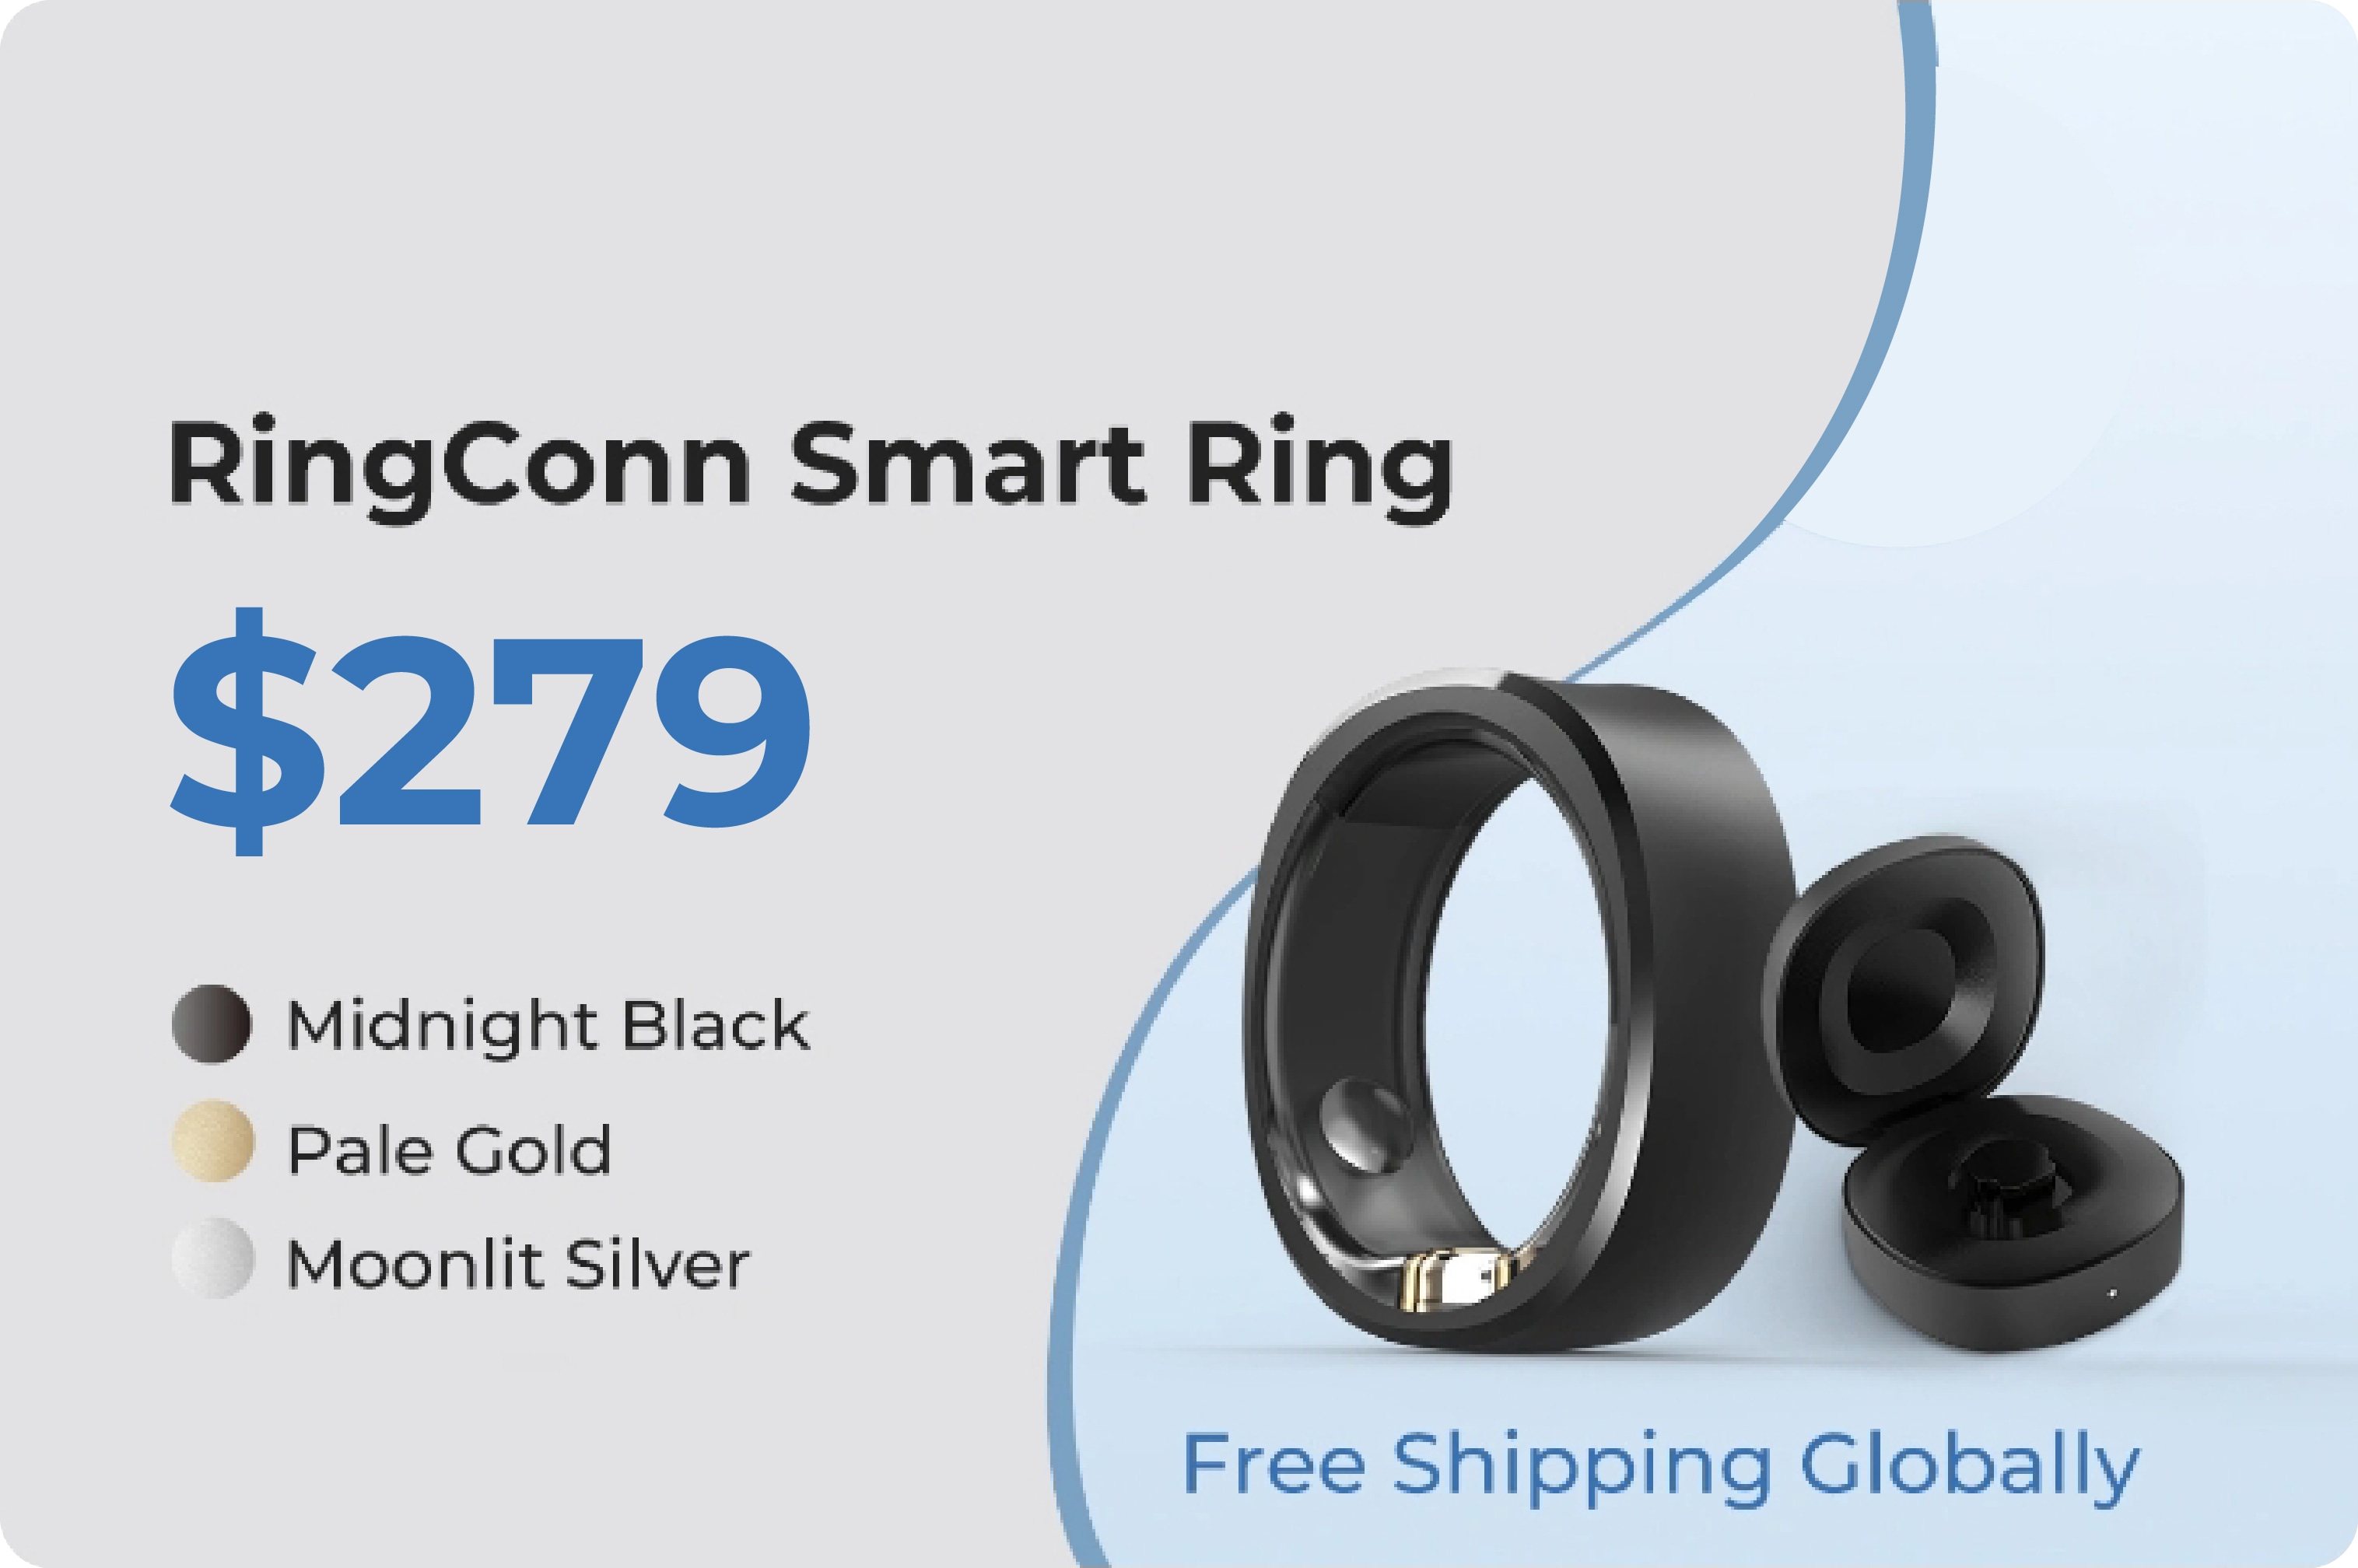 RingConn Smart Ring UK Review